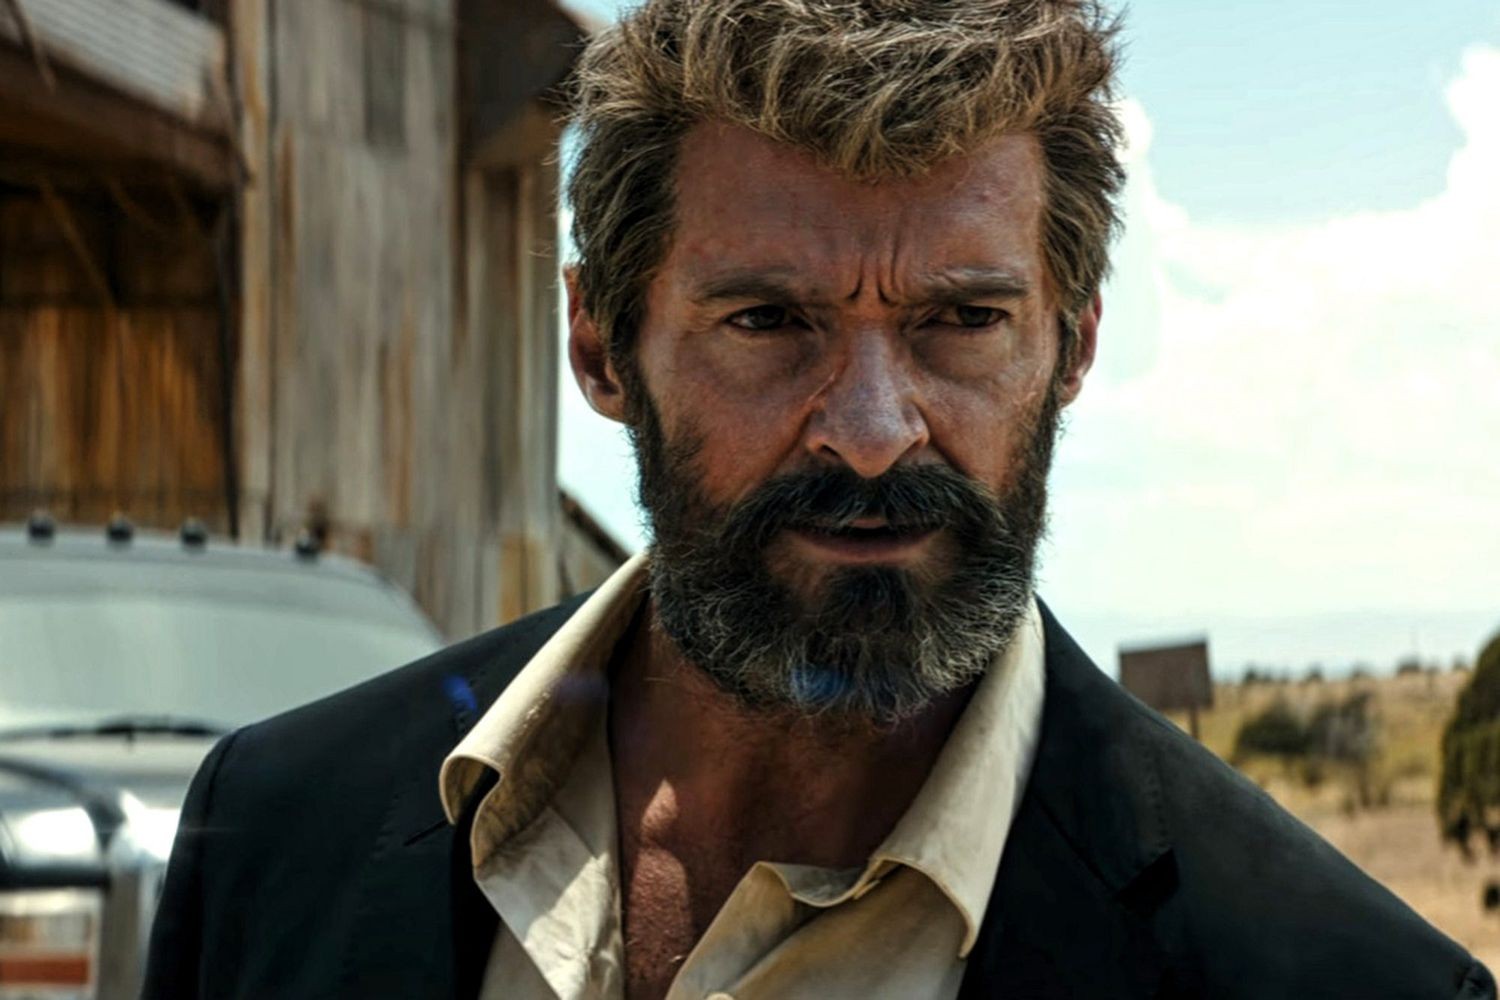 Despite ststimg jis retirement after Logan. Hugh Jackman is returnign as Wolverine in Deadpool & Wolverine